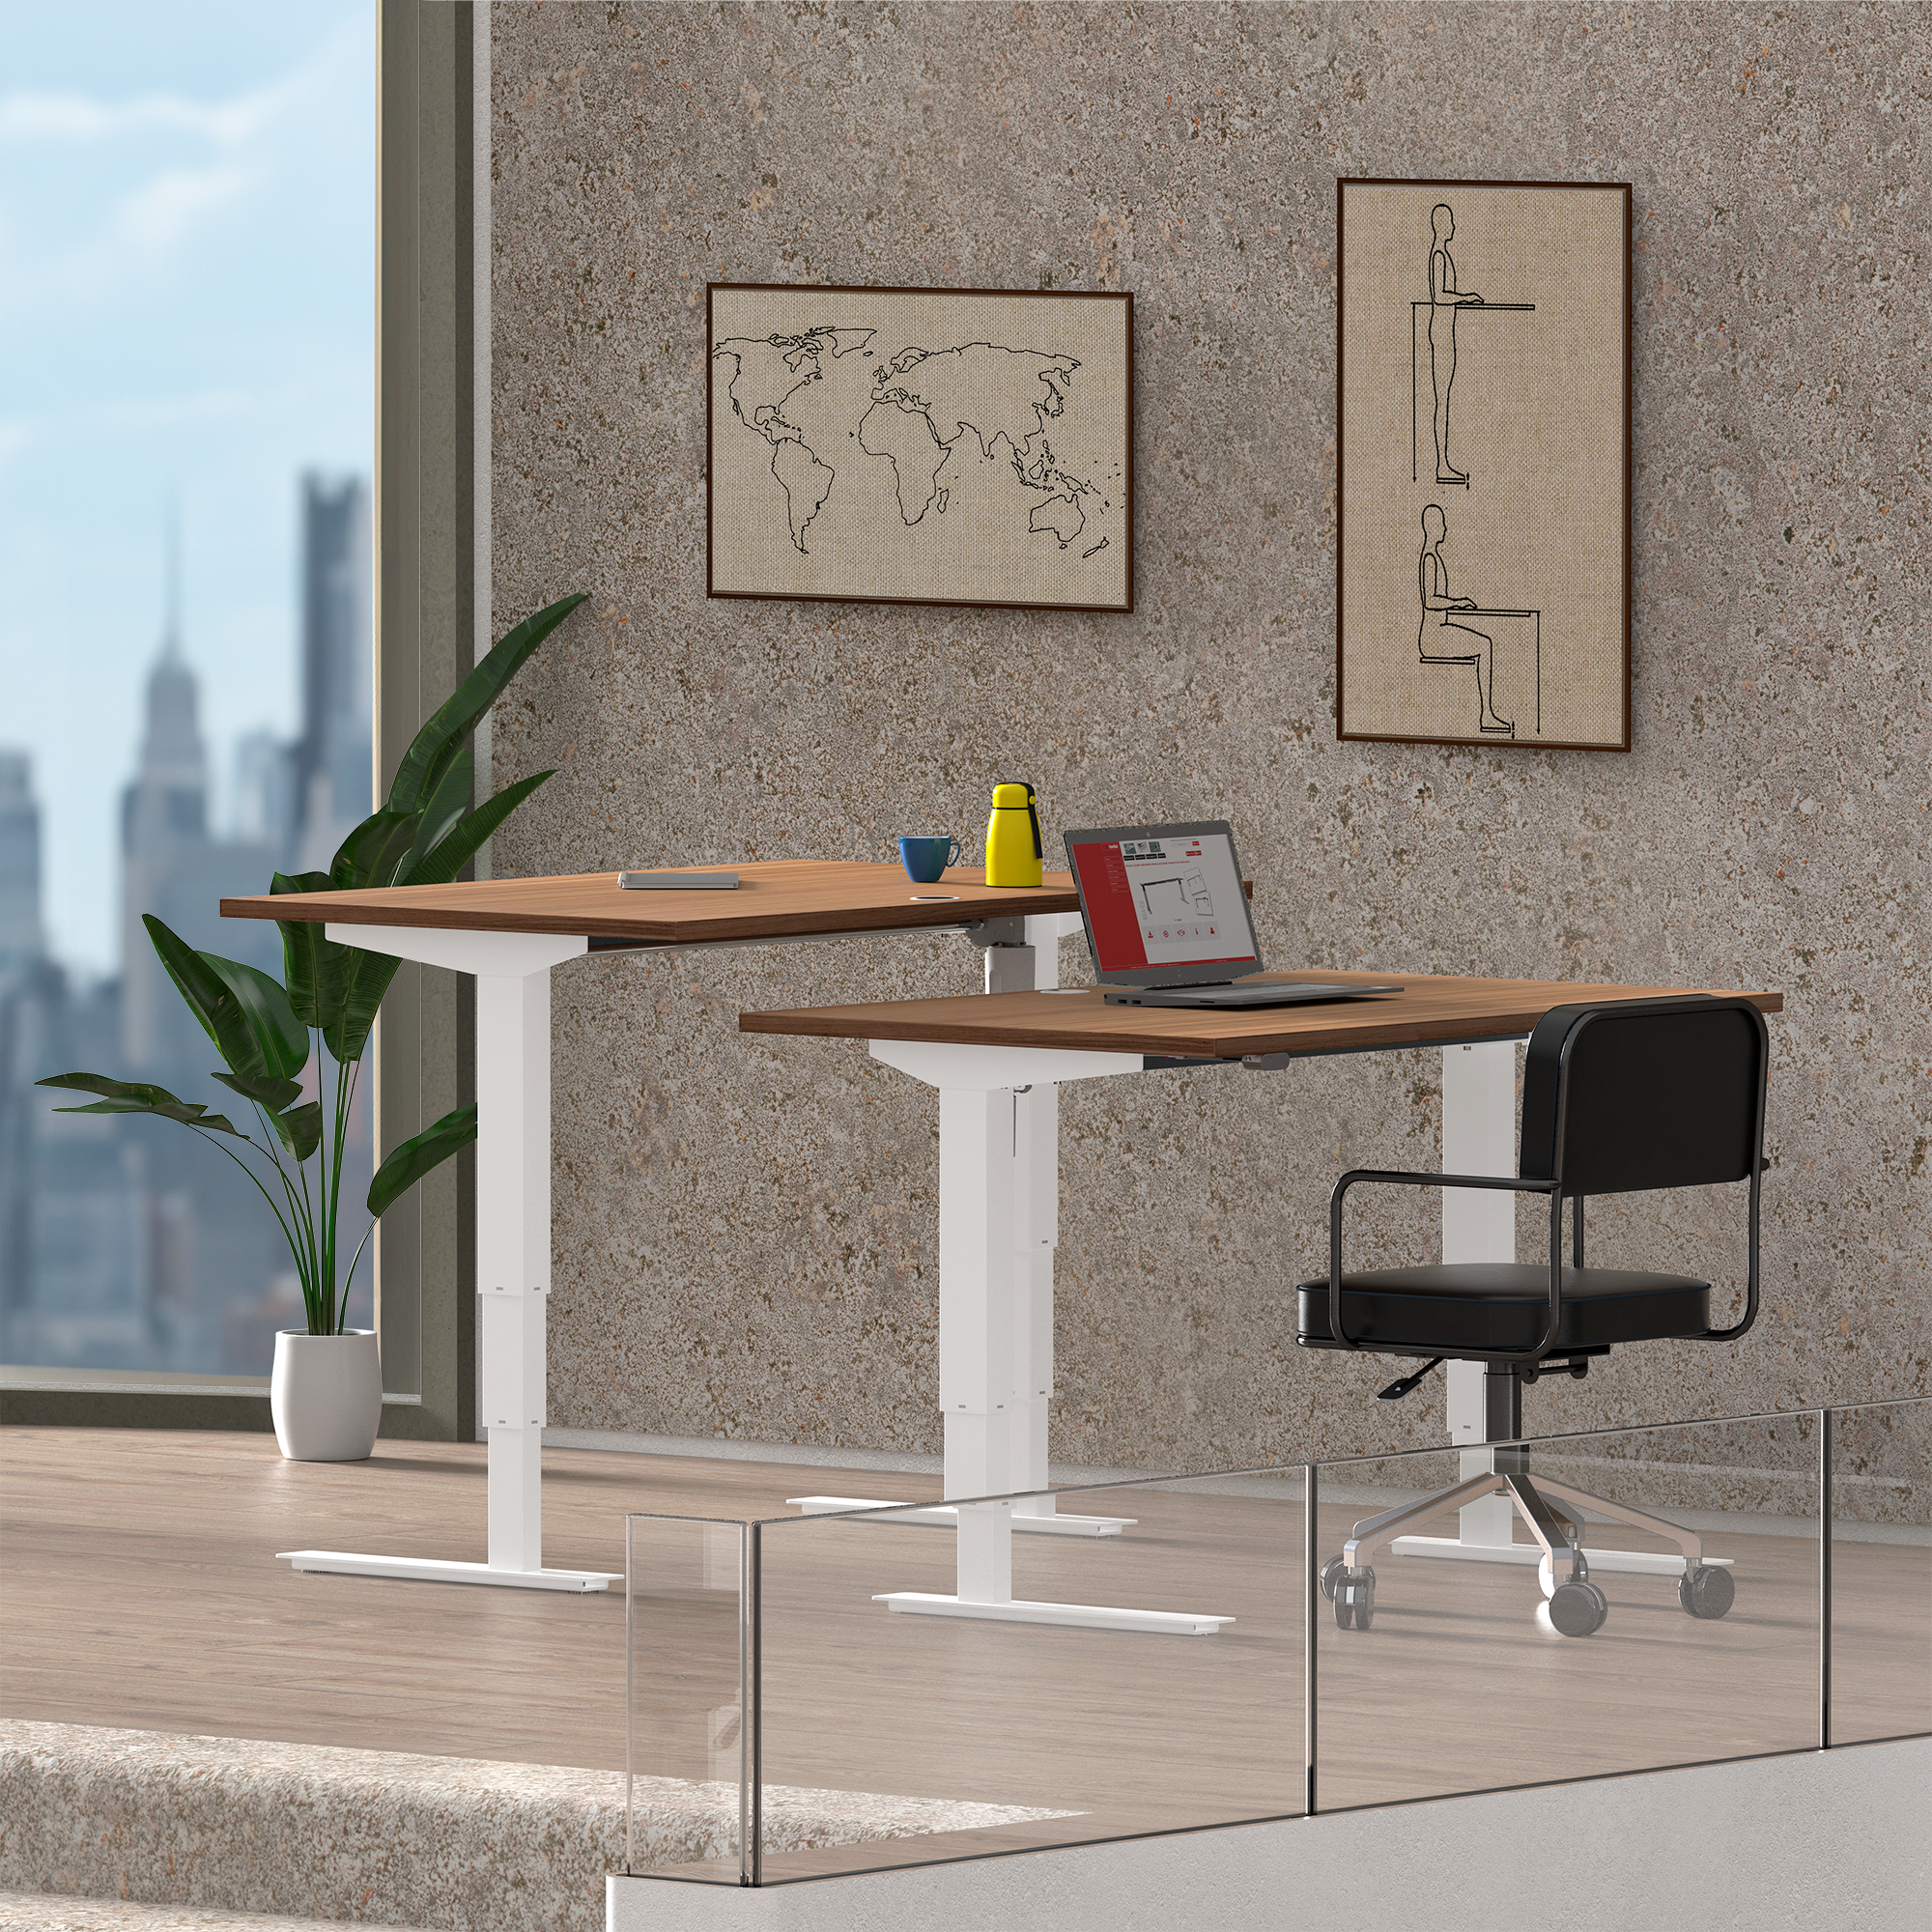 Electric Adjustable Desk | 120x60 cm | Walnut with white frame